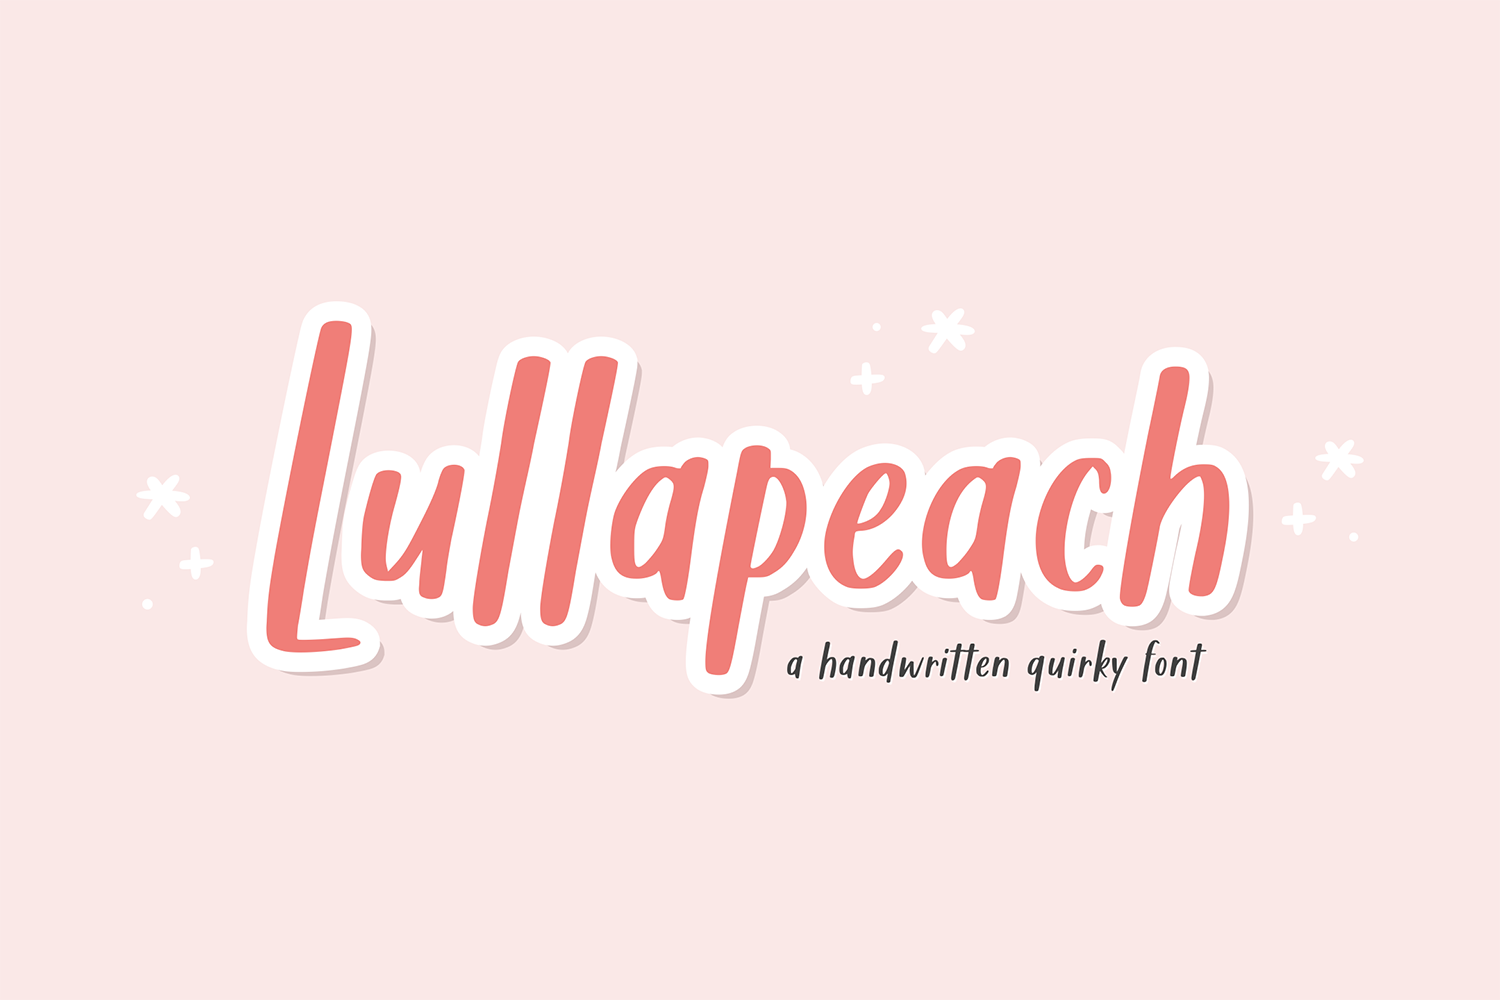 Lullapeach Free Font